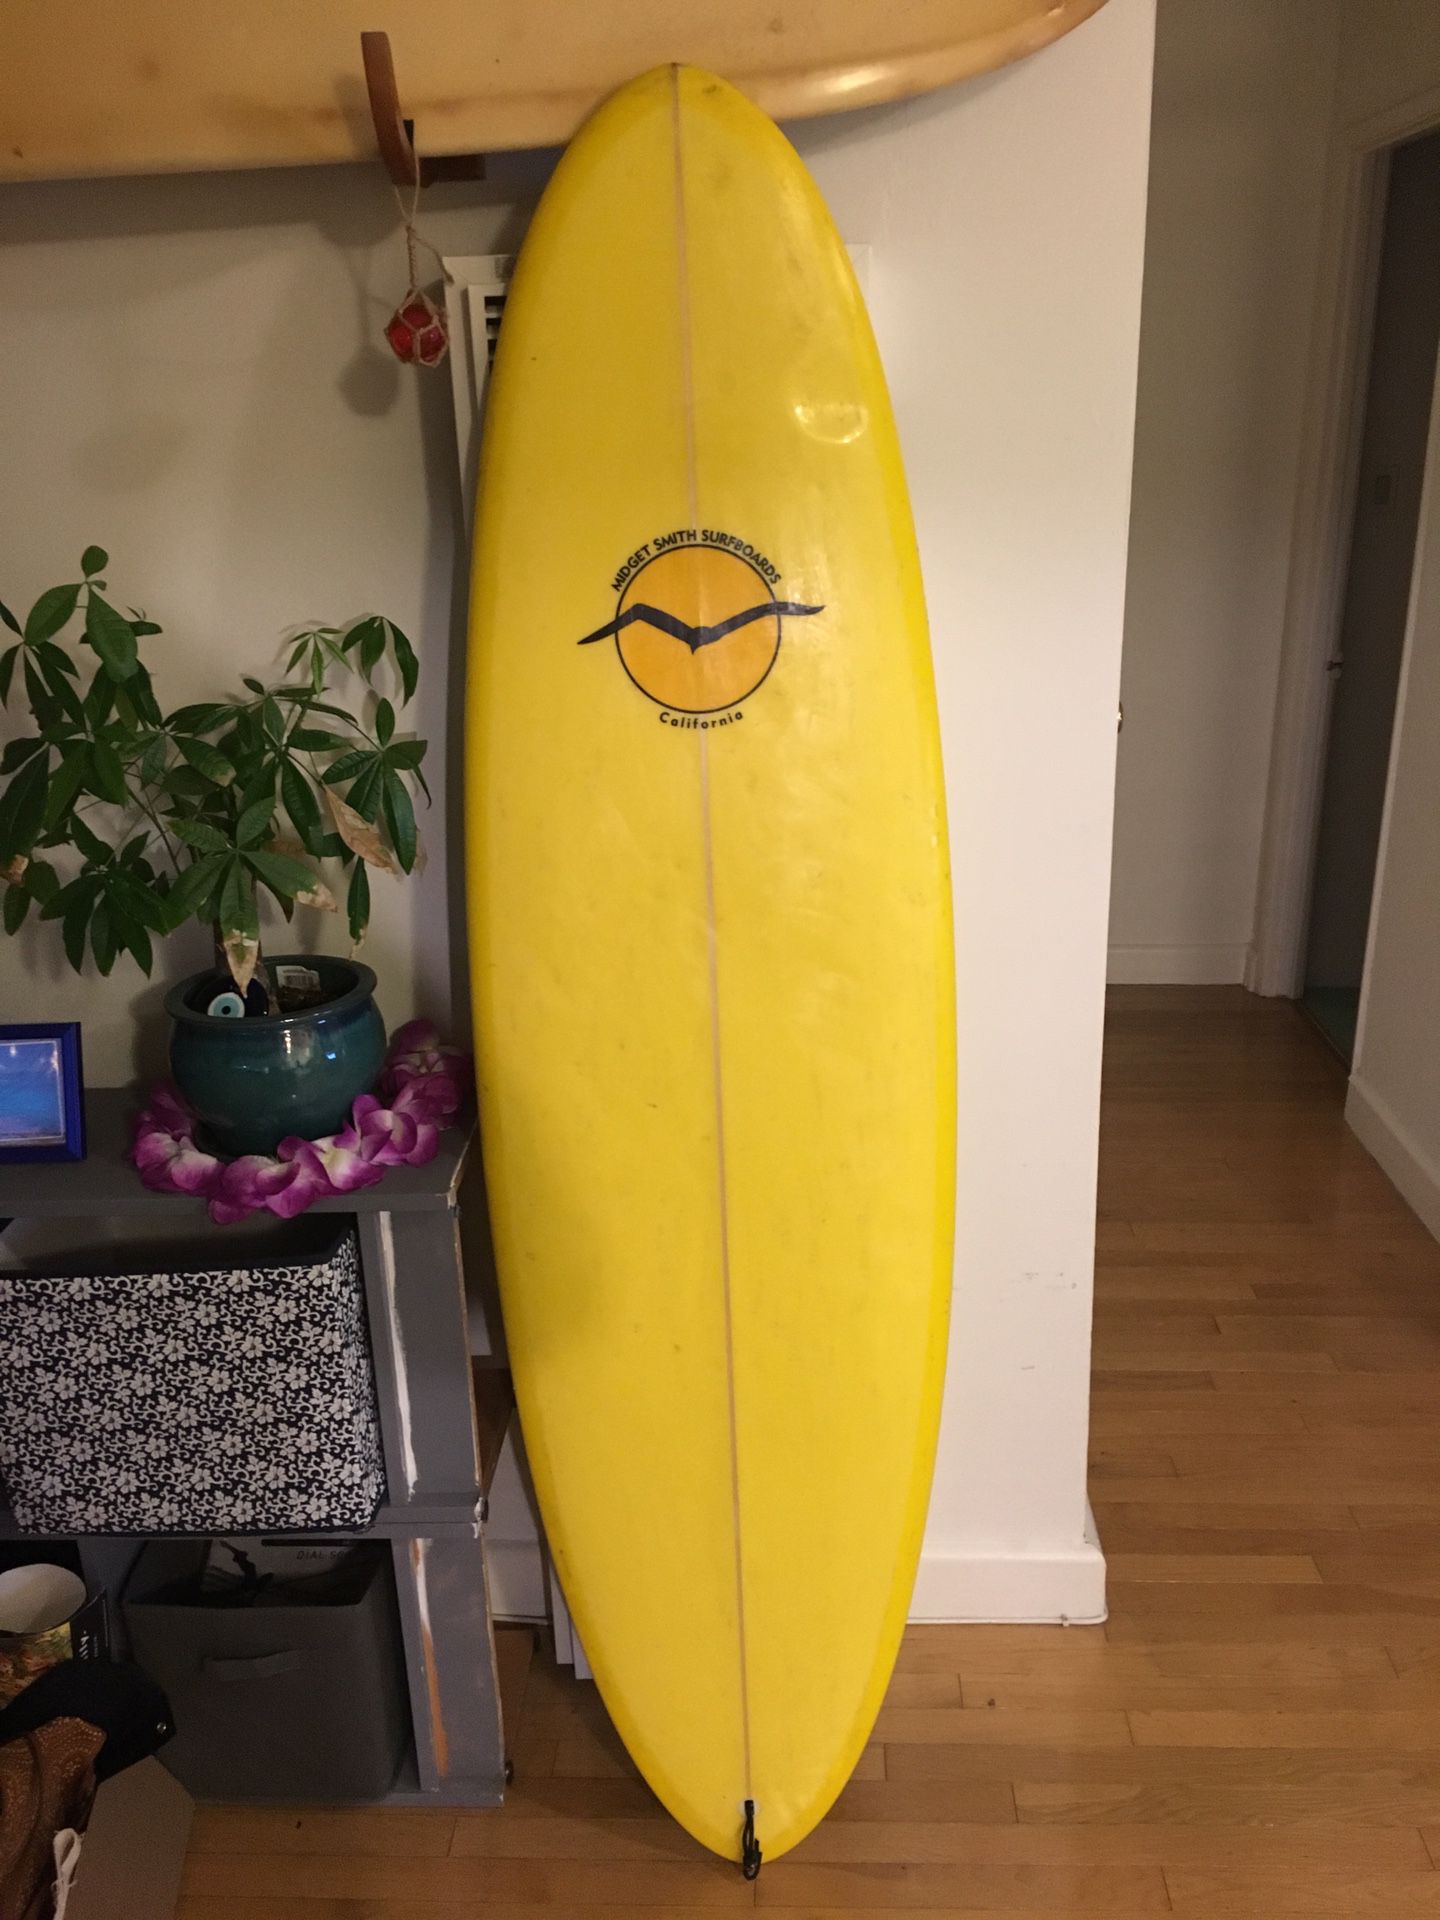 6' single fin egg surfboard Midget smith